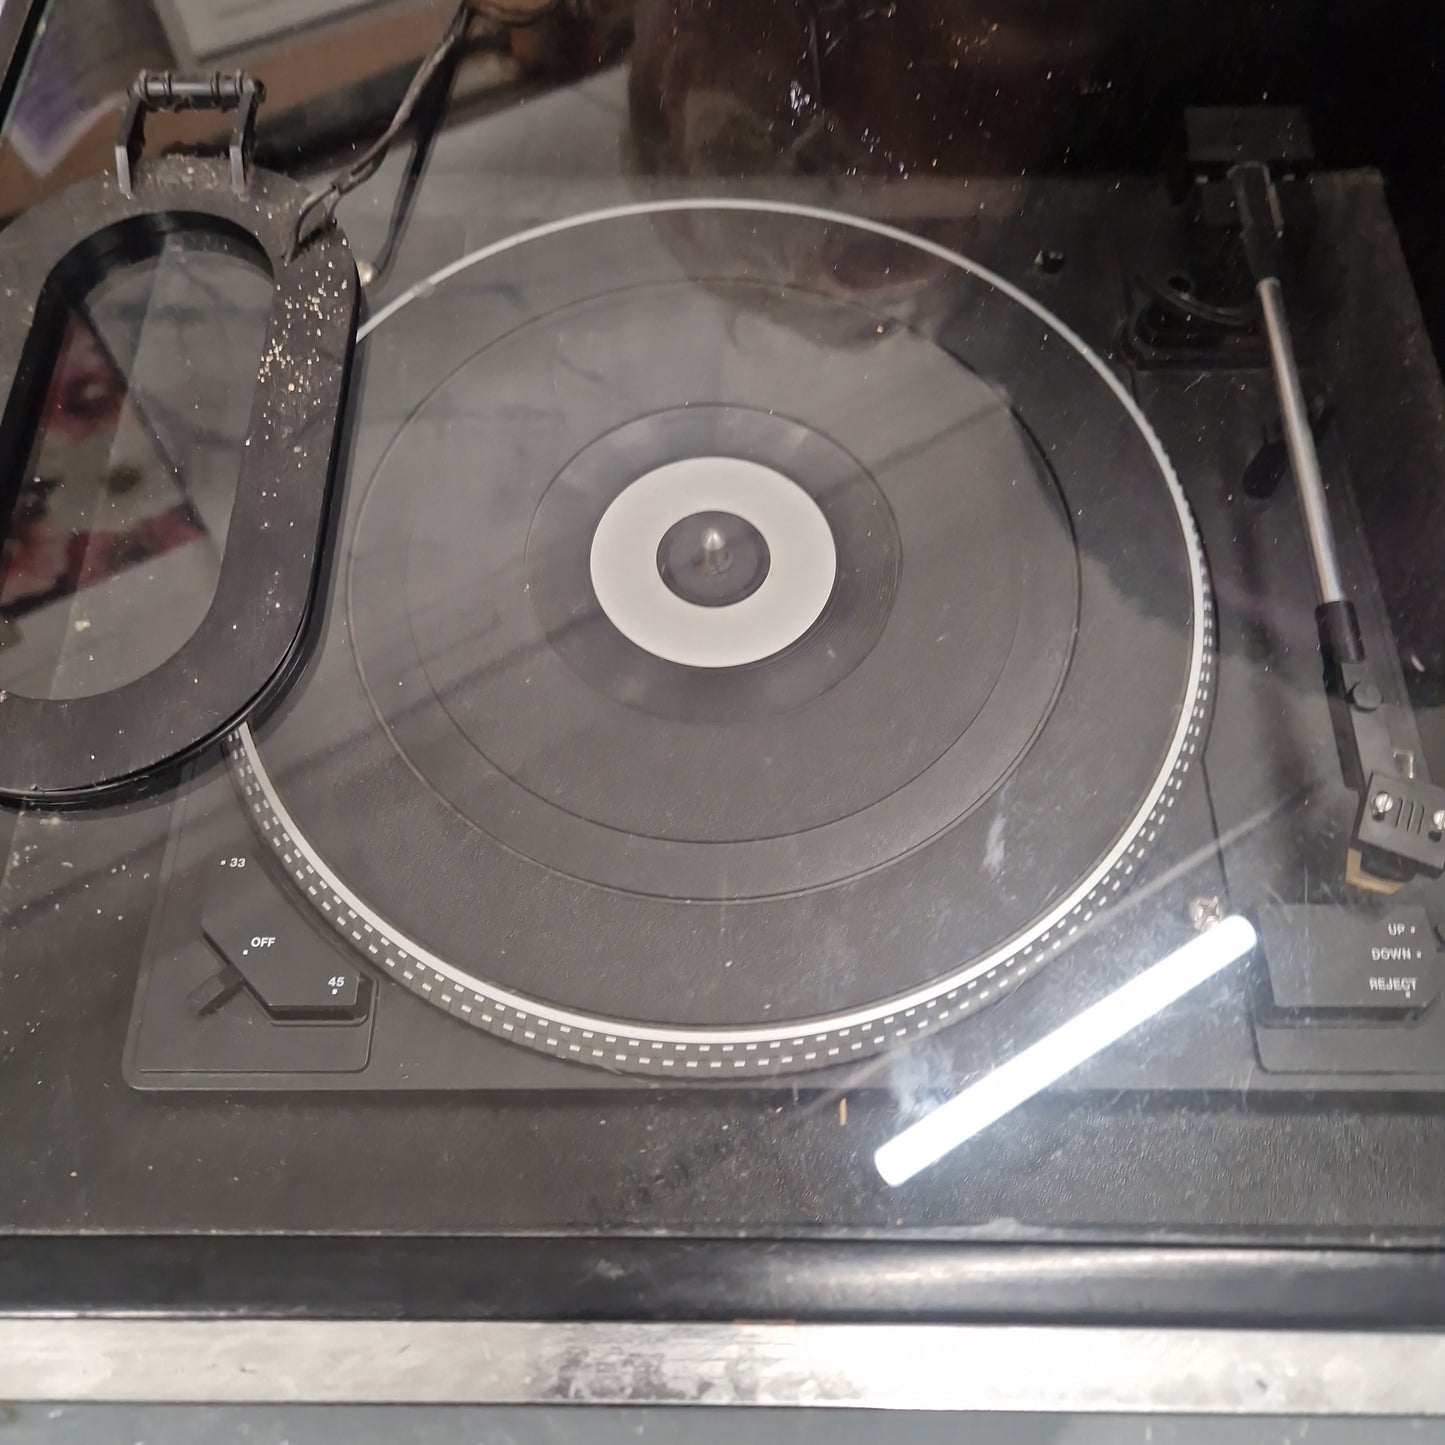 Sanyo vinyl record player